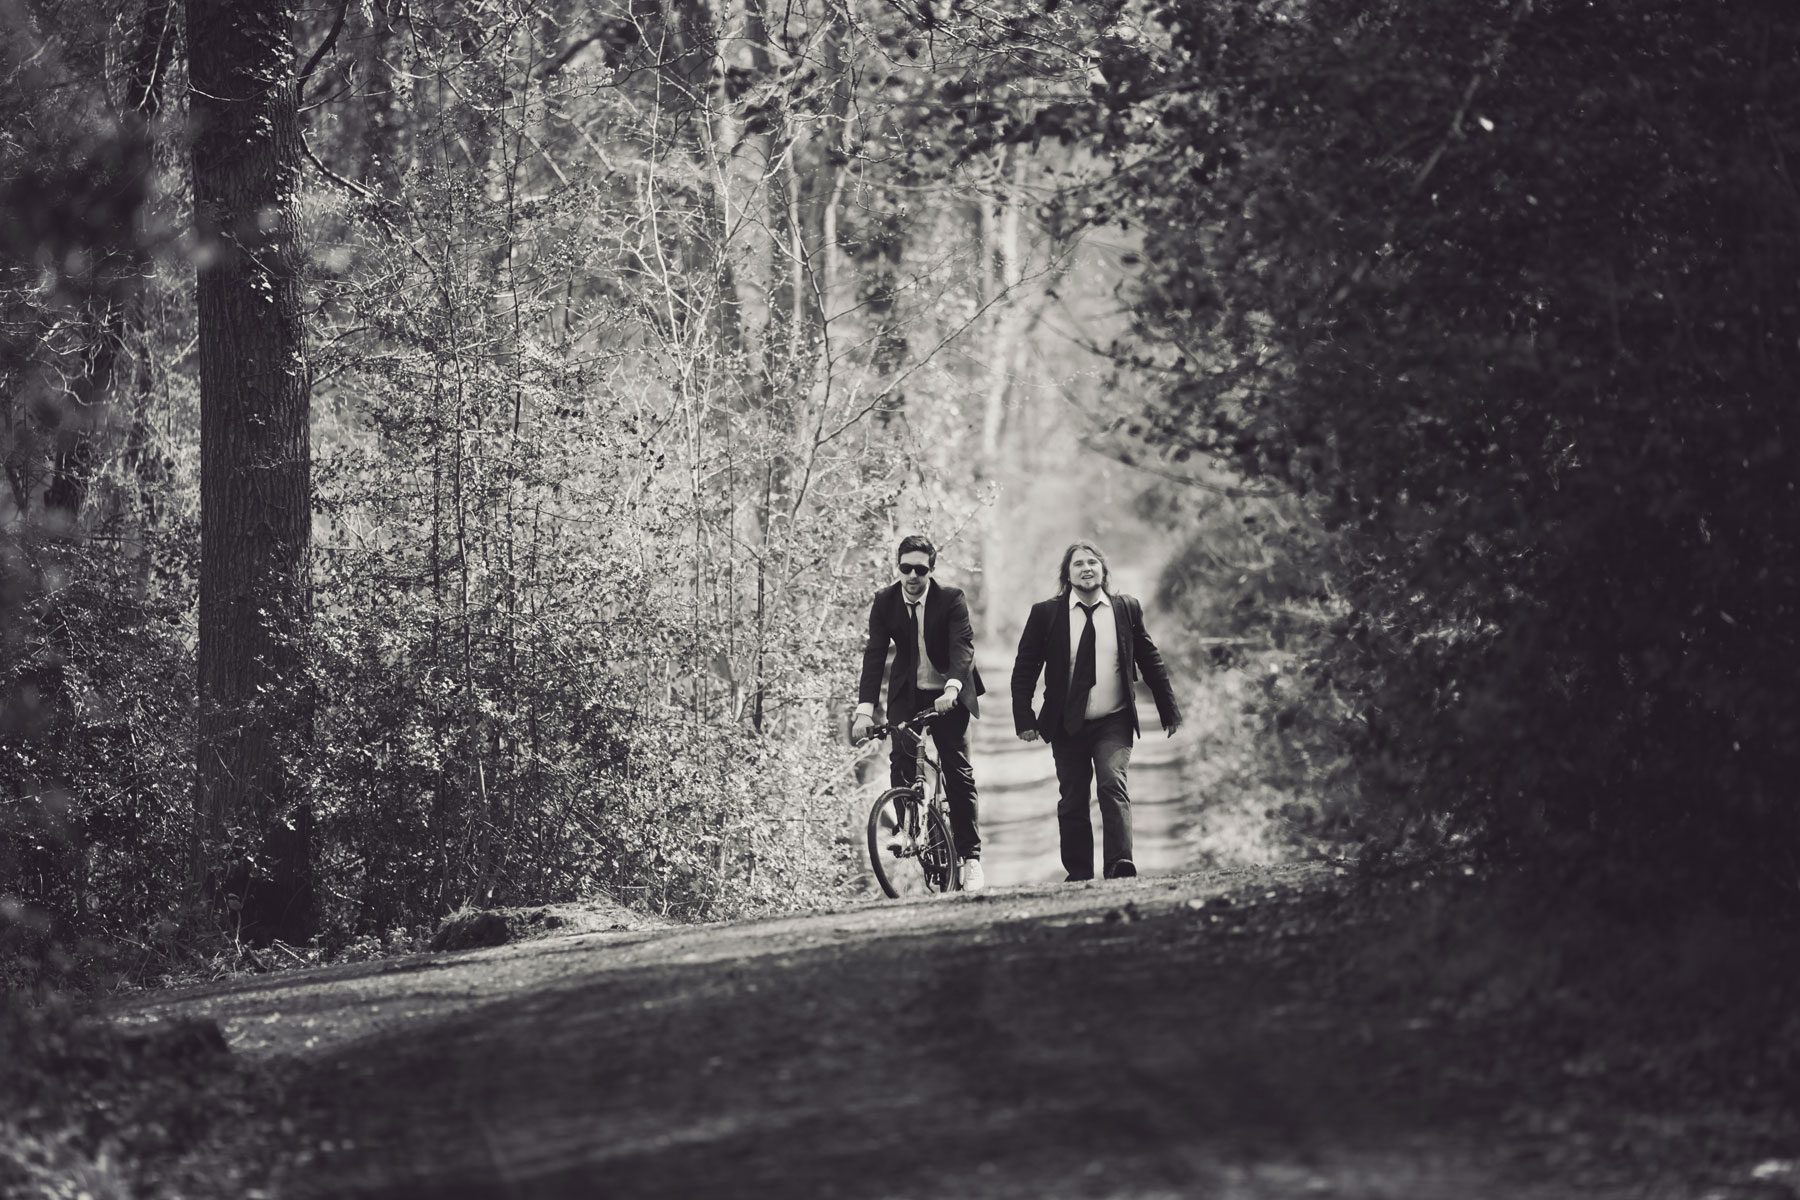 riding a bike through the woods